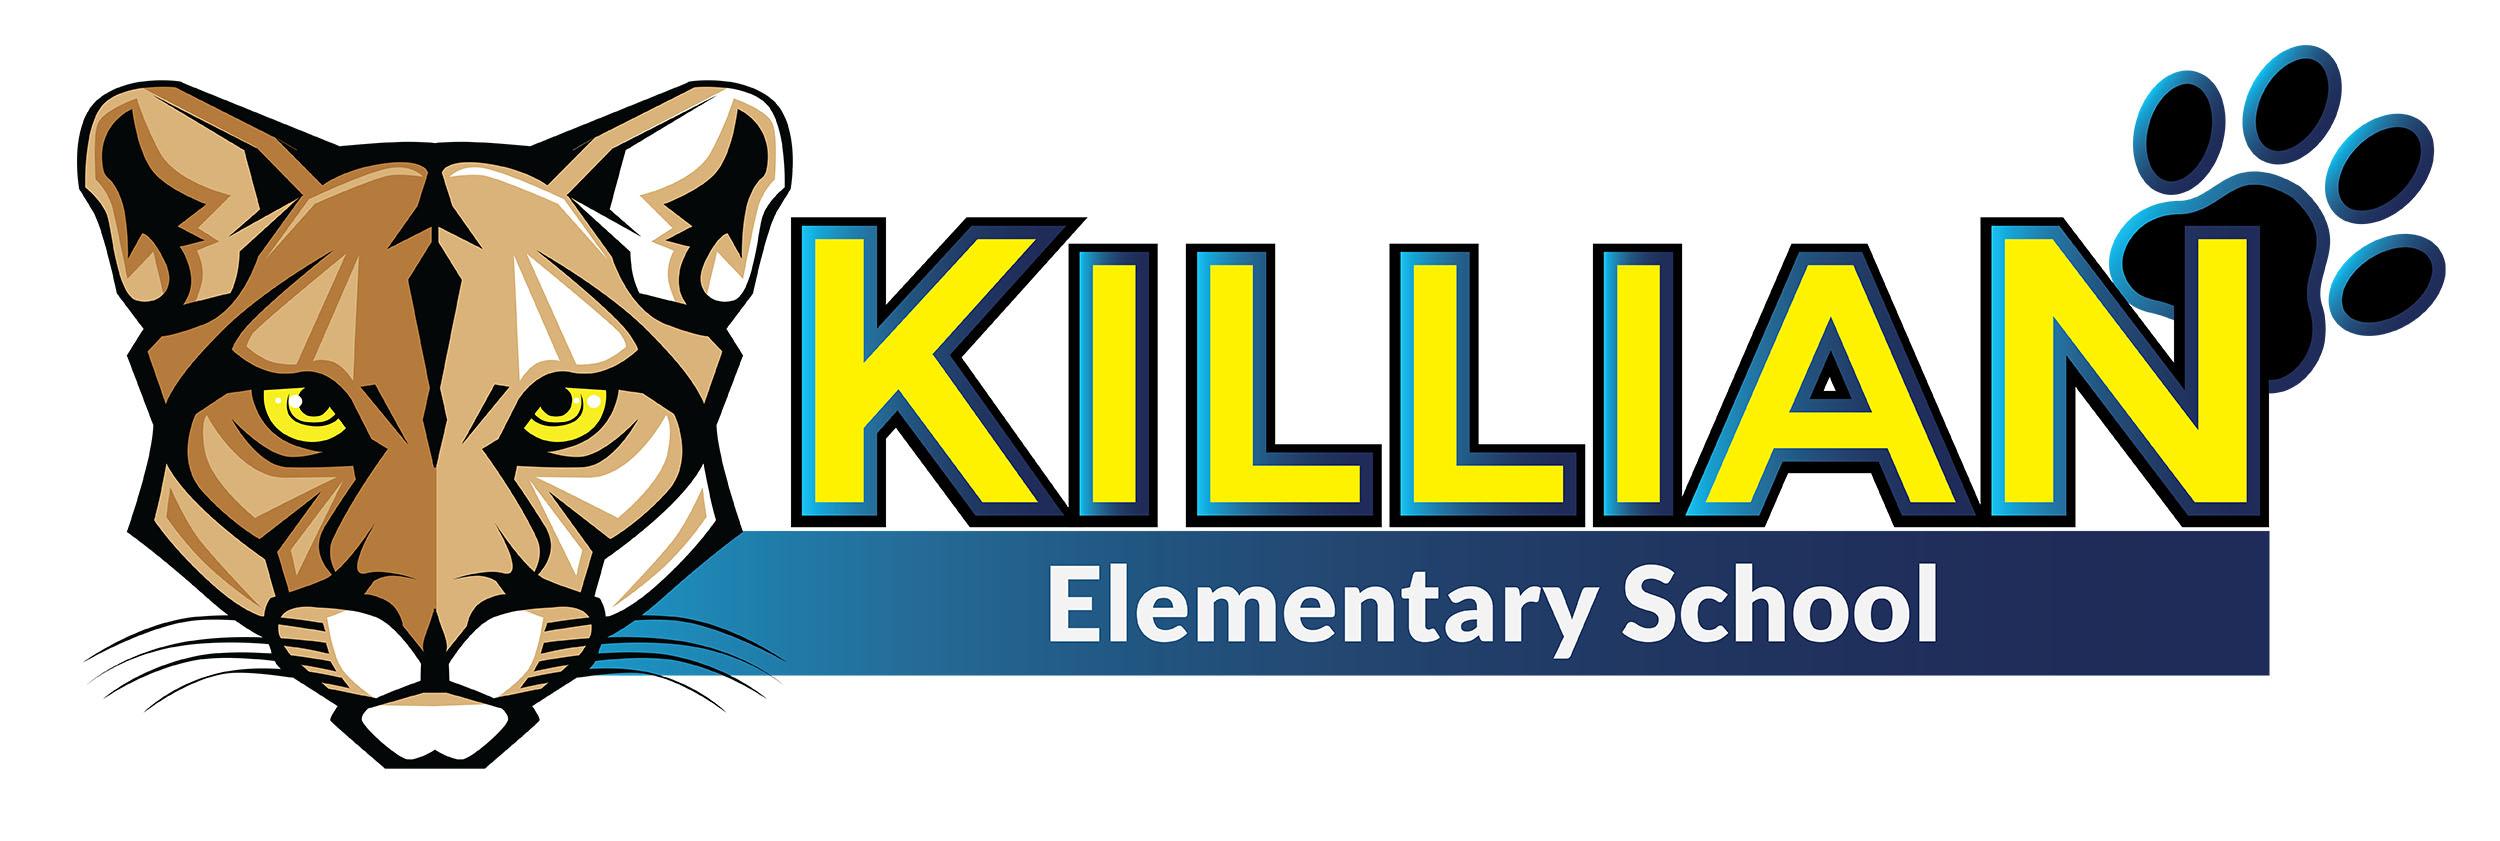 enroll-now-for-2021-22-watch-our-video-killian-elementary-school